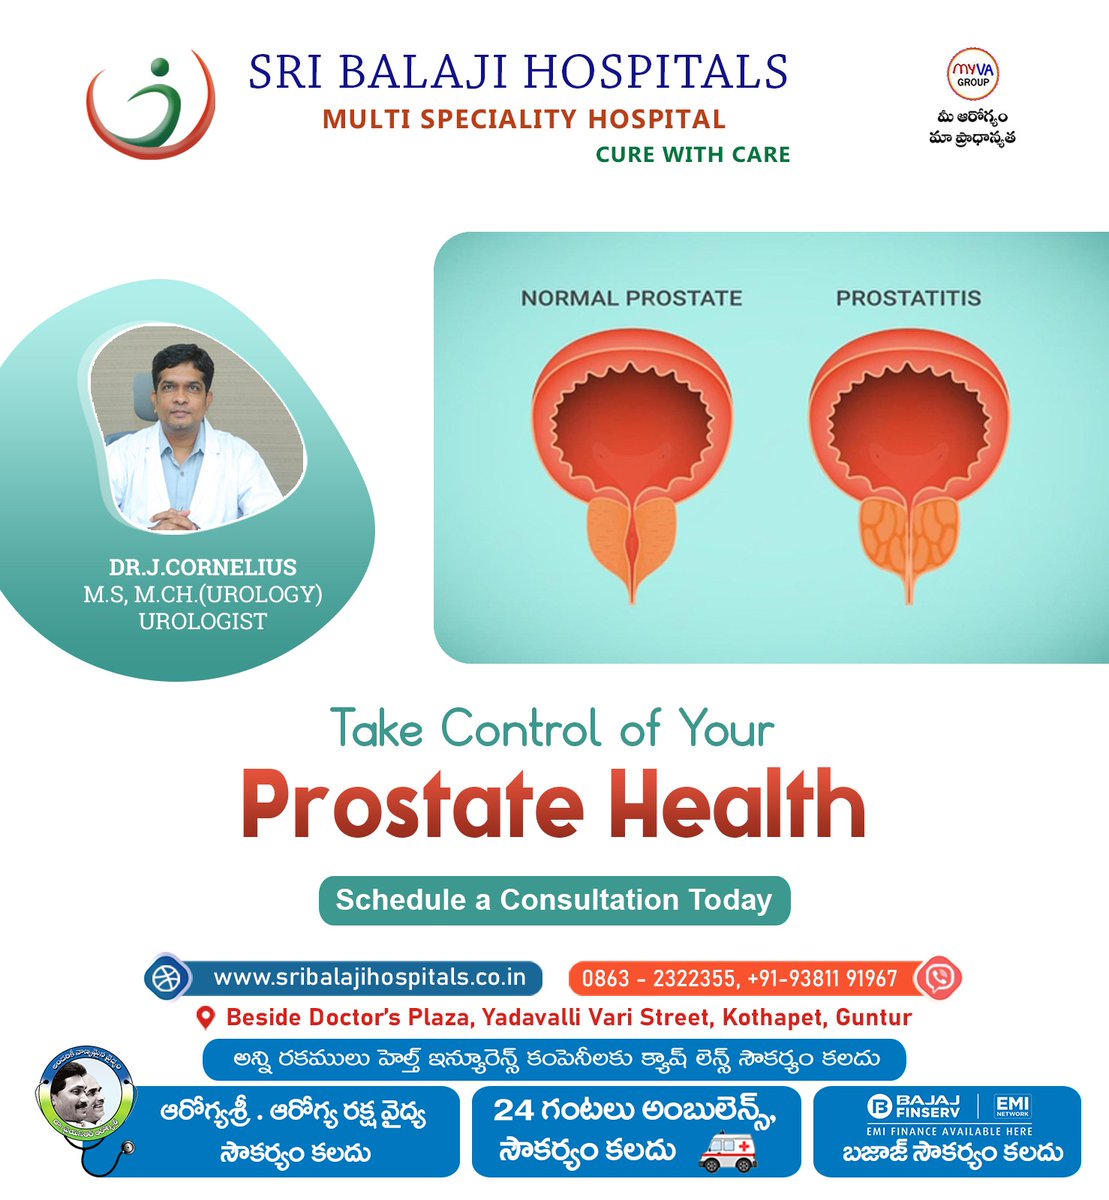 Take Control Of Your Prostate Health Consult our Expert Doctor Today!

#ProstateHealth #MensHealth #ProstateConsultation #UrologyCare #SriBalajiHospital #GunturHealth #DrJCornelius #PreventiveHealth
#ProstateAwareness #HealthCheckup #GunturDoctors
#Urologist #HealthyLiving